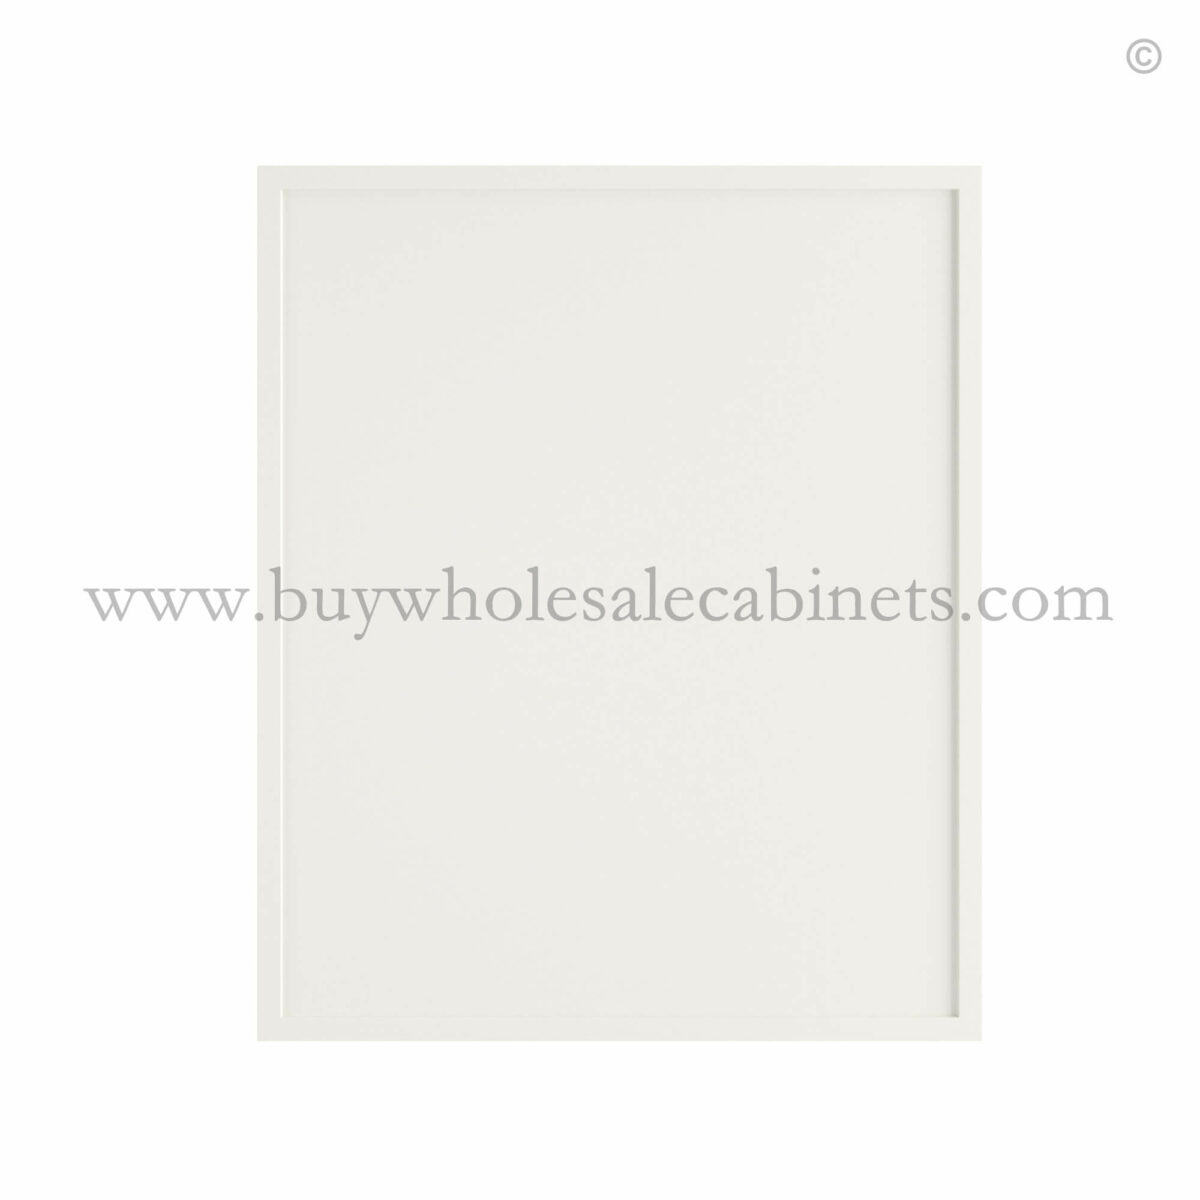 slim white cabinets